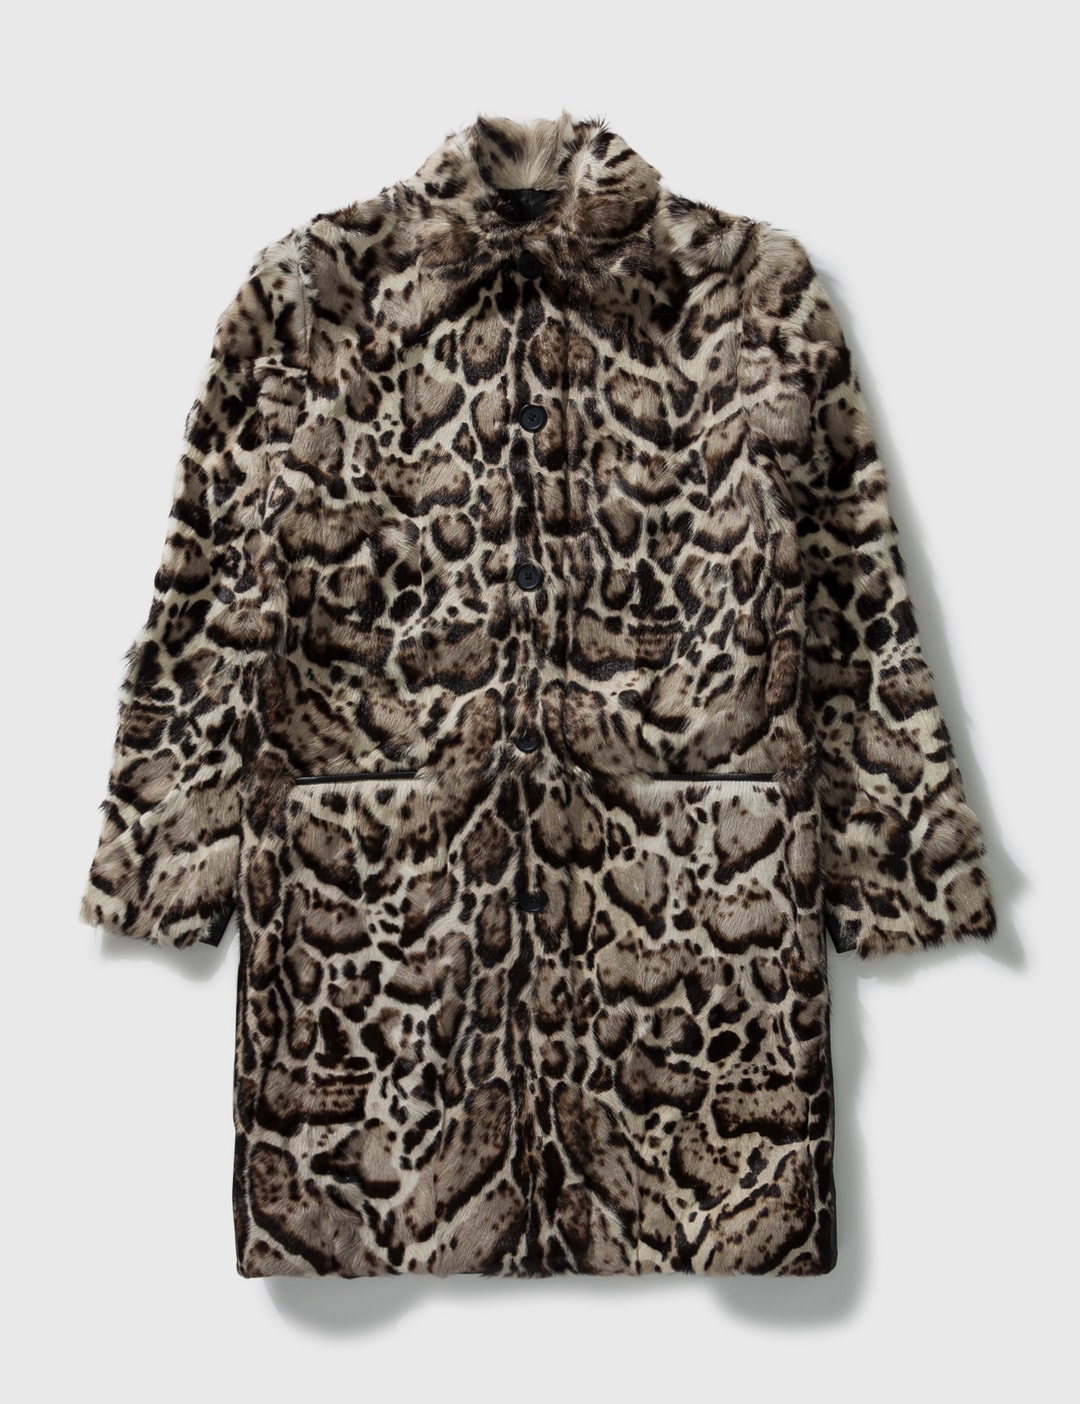 Christopher Kane Leopard Leather Long Coat Placeholder Image